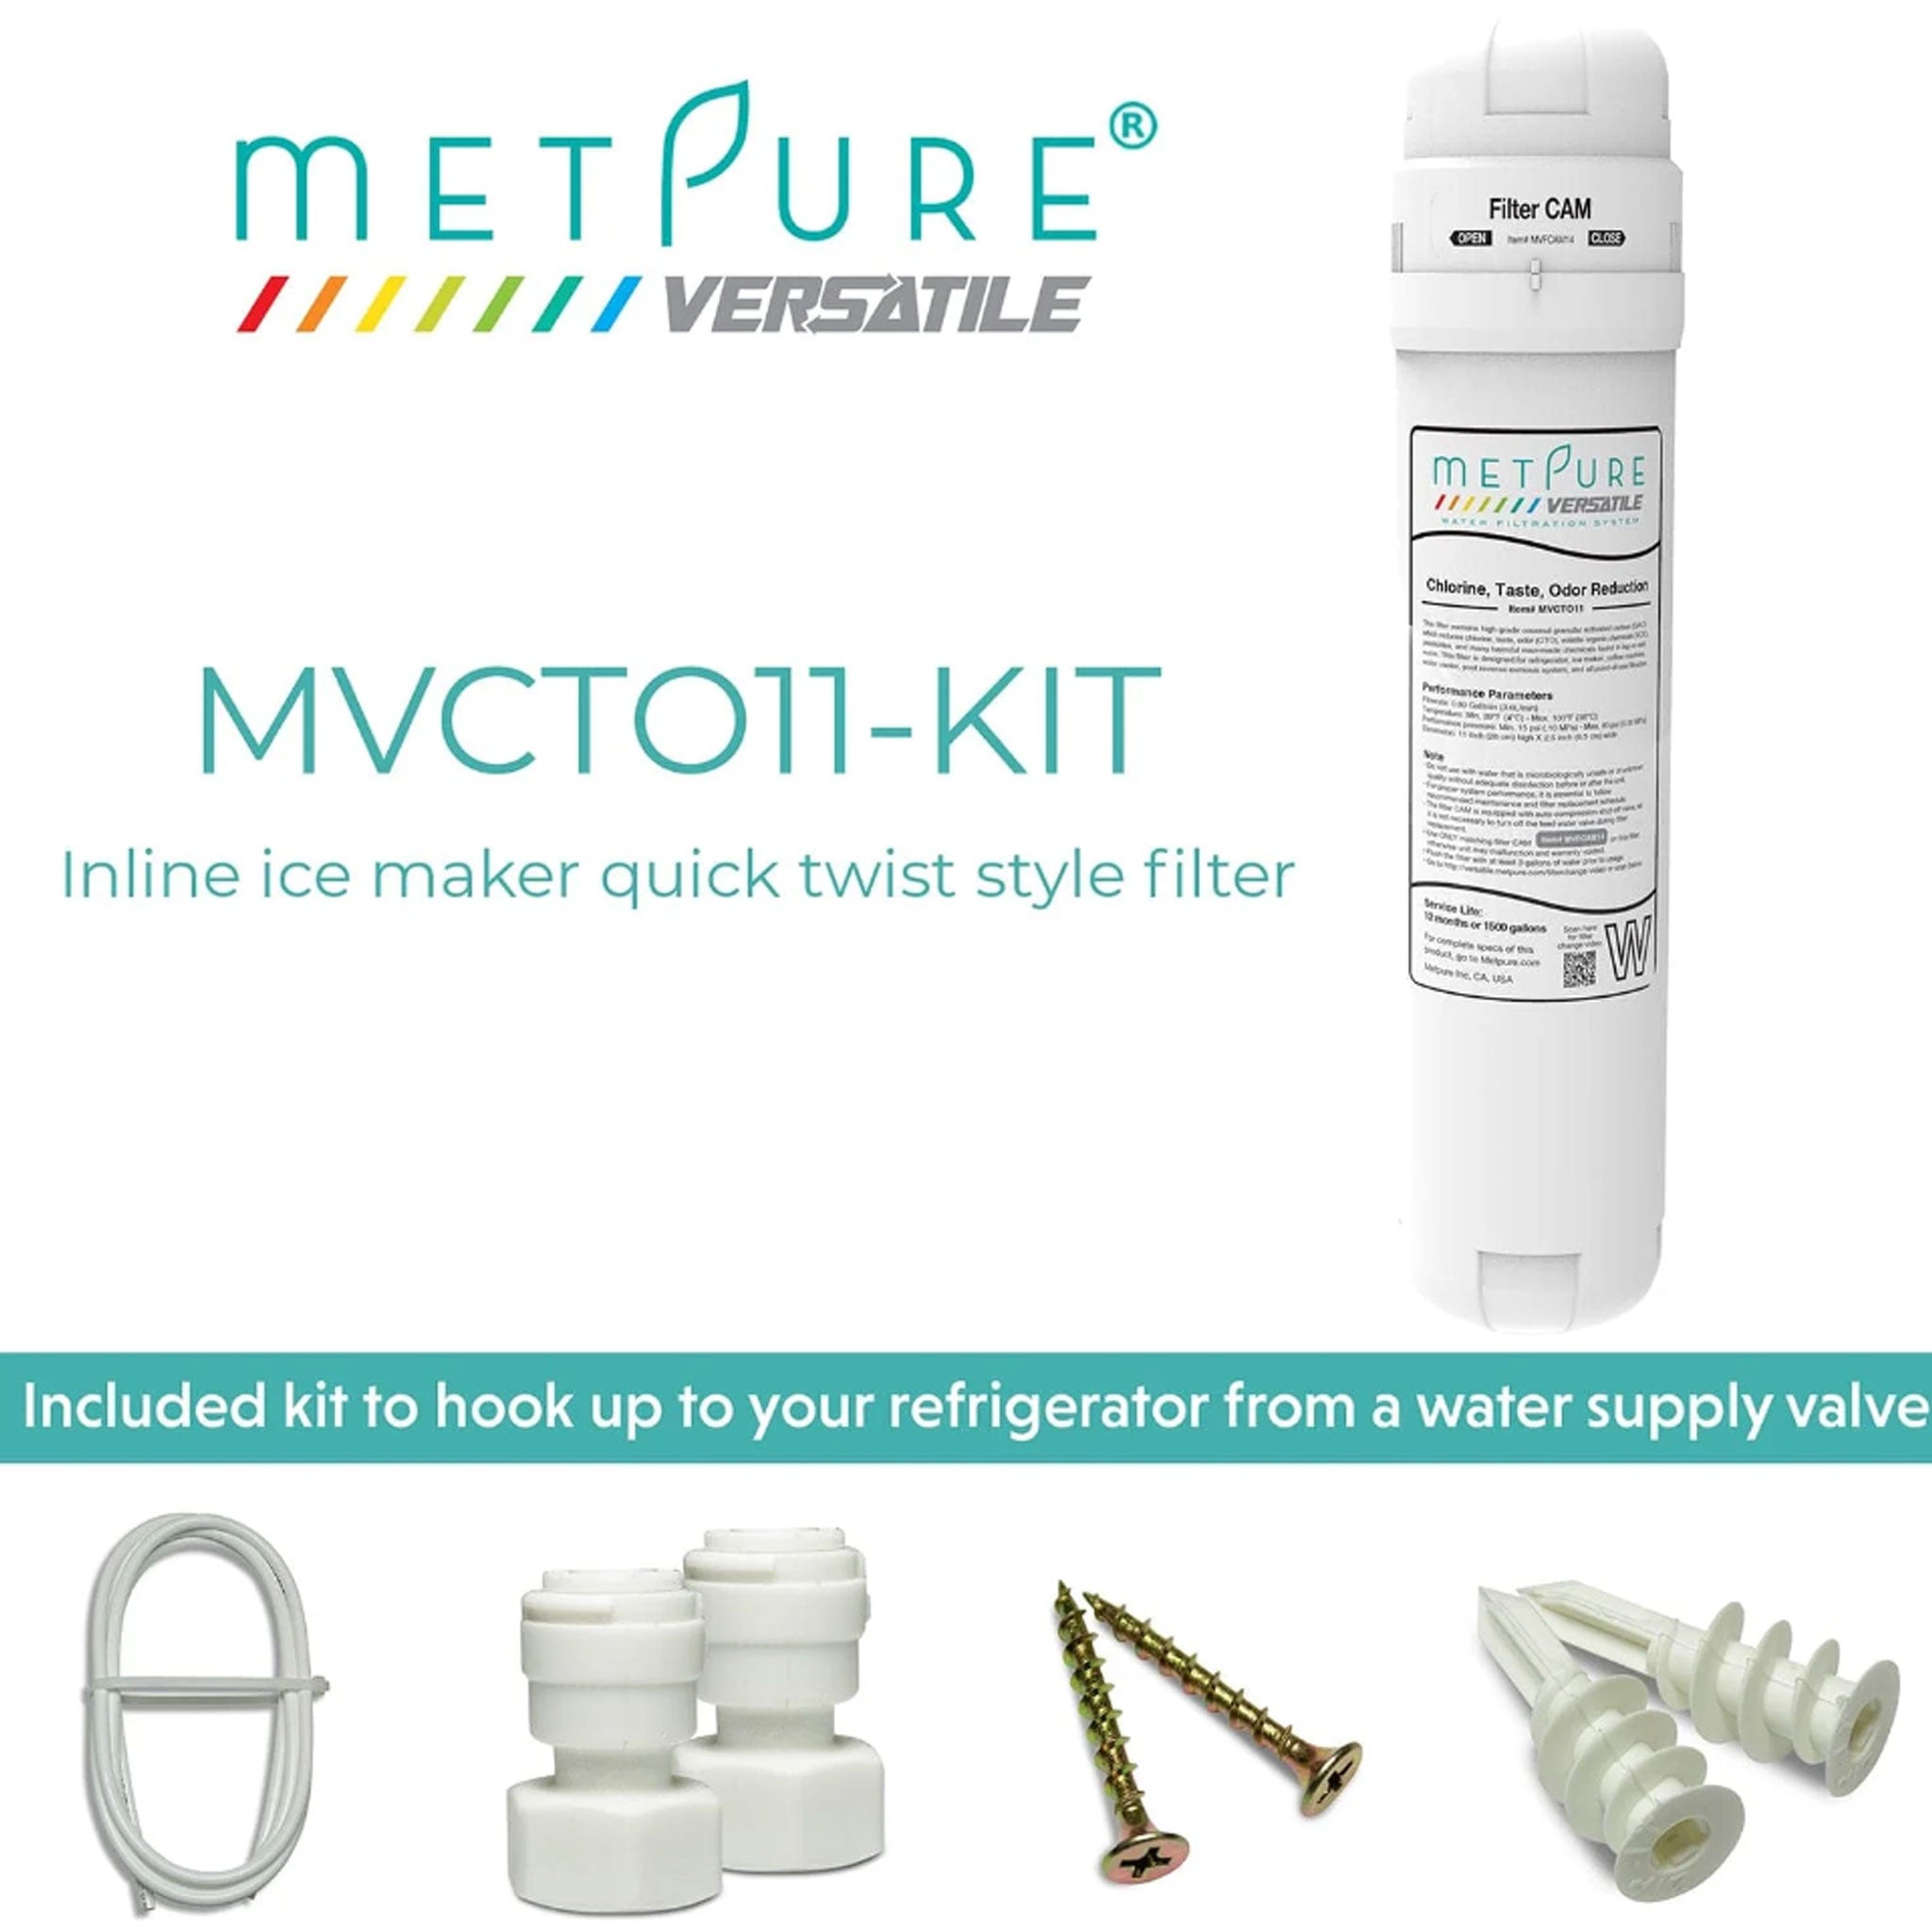 Metpure Versatile Inline MVCTO11-KIT Quick Twist Water Filter 1/4 for Refrigerator, Ice Maker, Coffee Maker, Reduces Bad Taste, Odor, Chlorine in